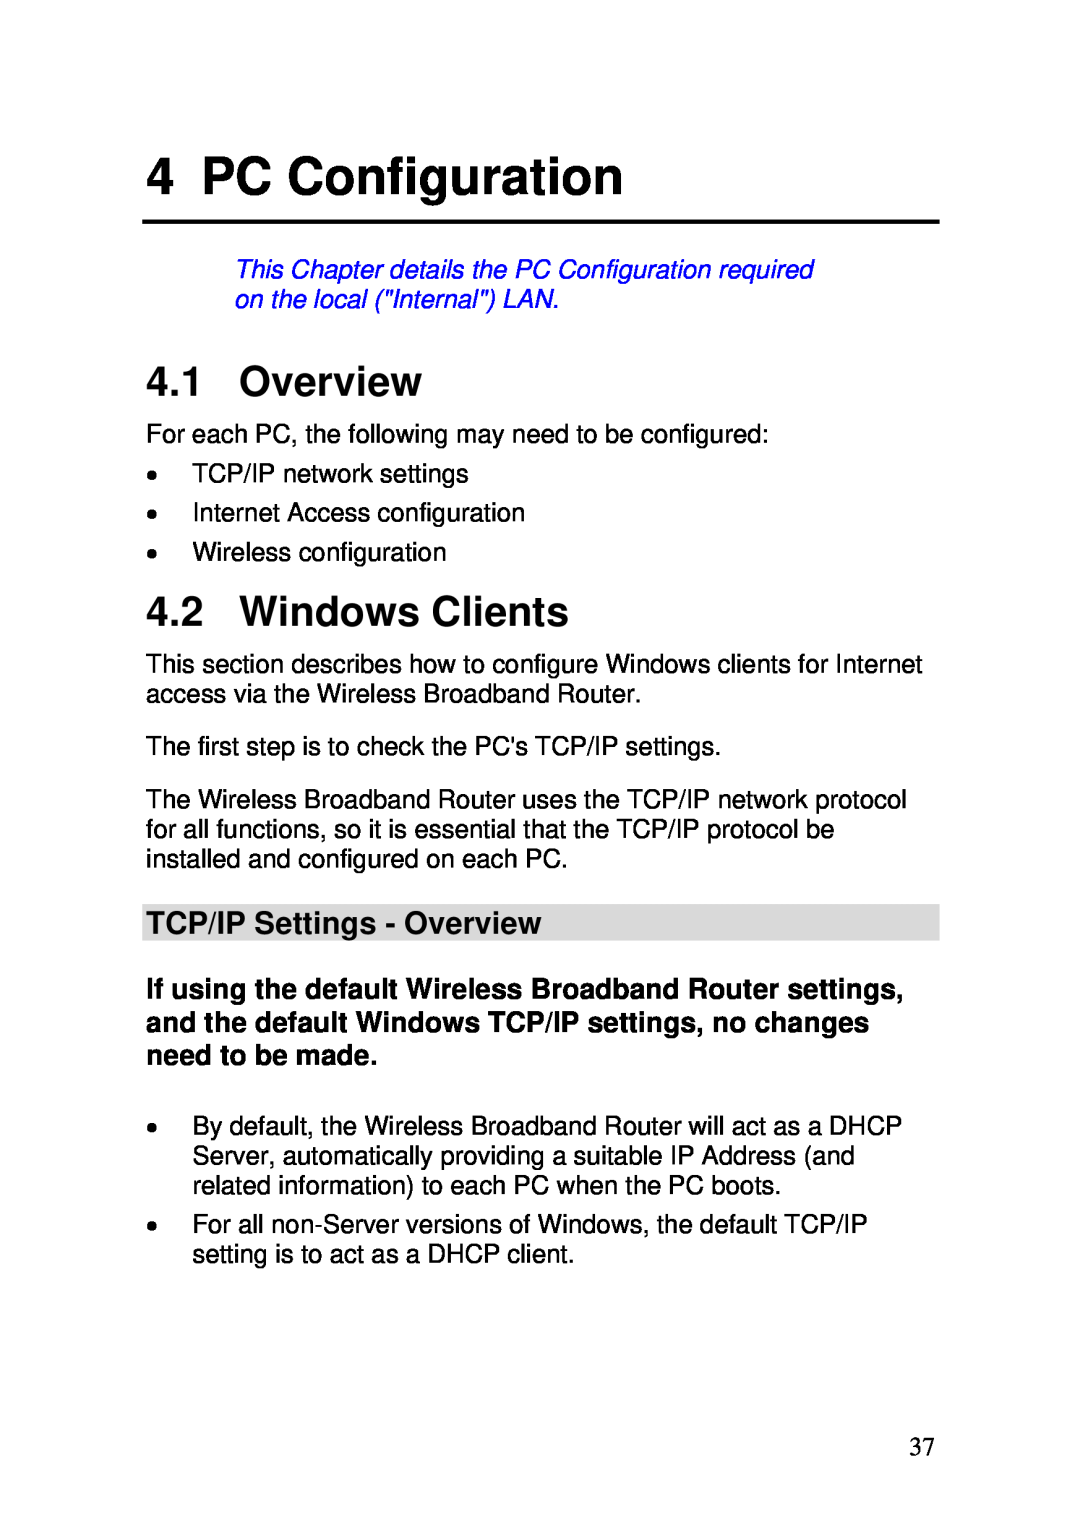 3Com WBR-6000 user manual PC Configuration, Windows Clients, TCP/IP Settings - Overview 